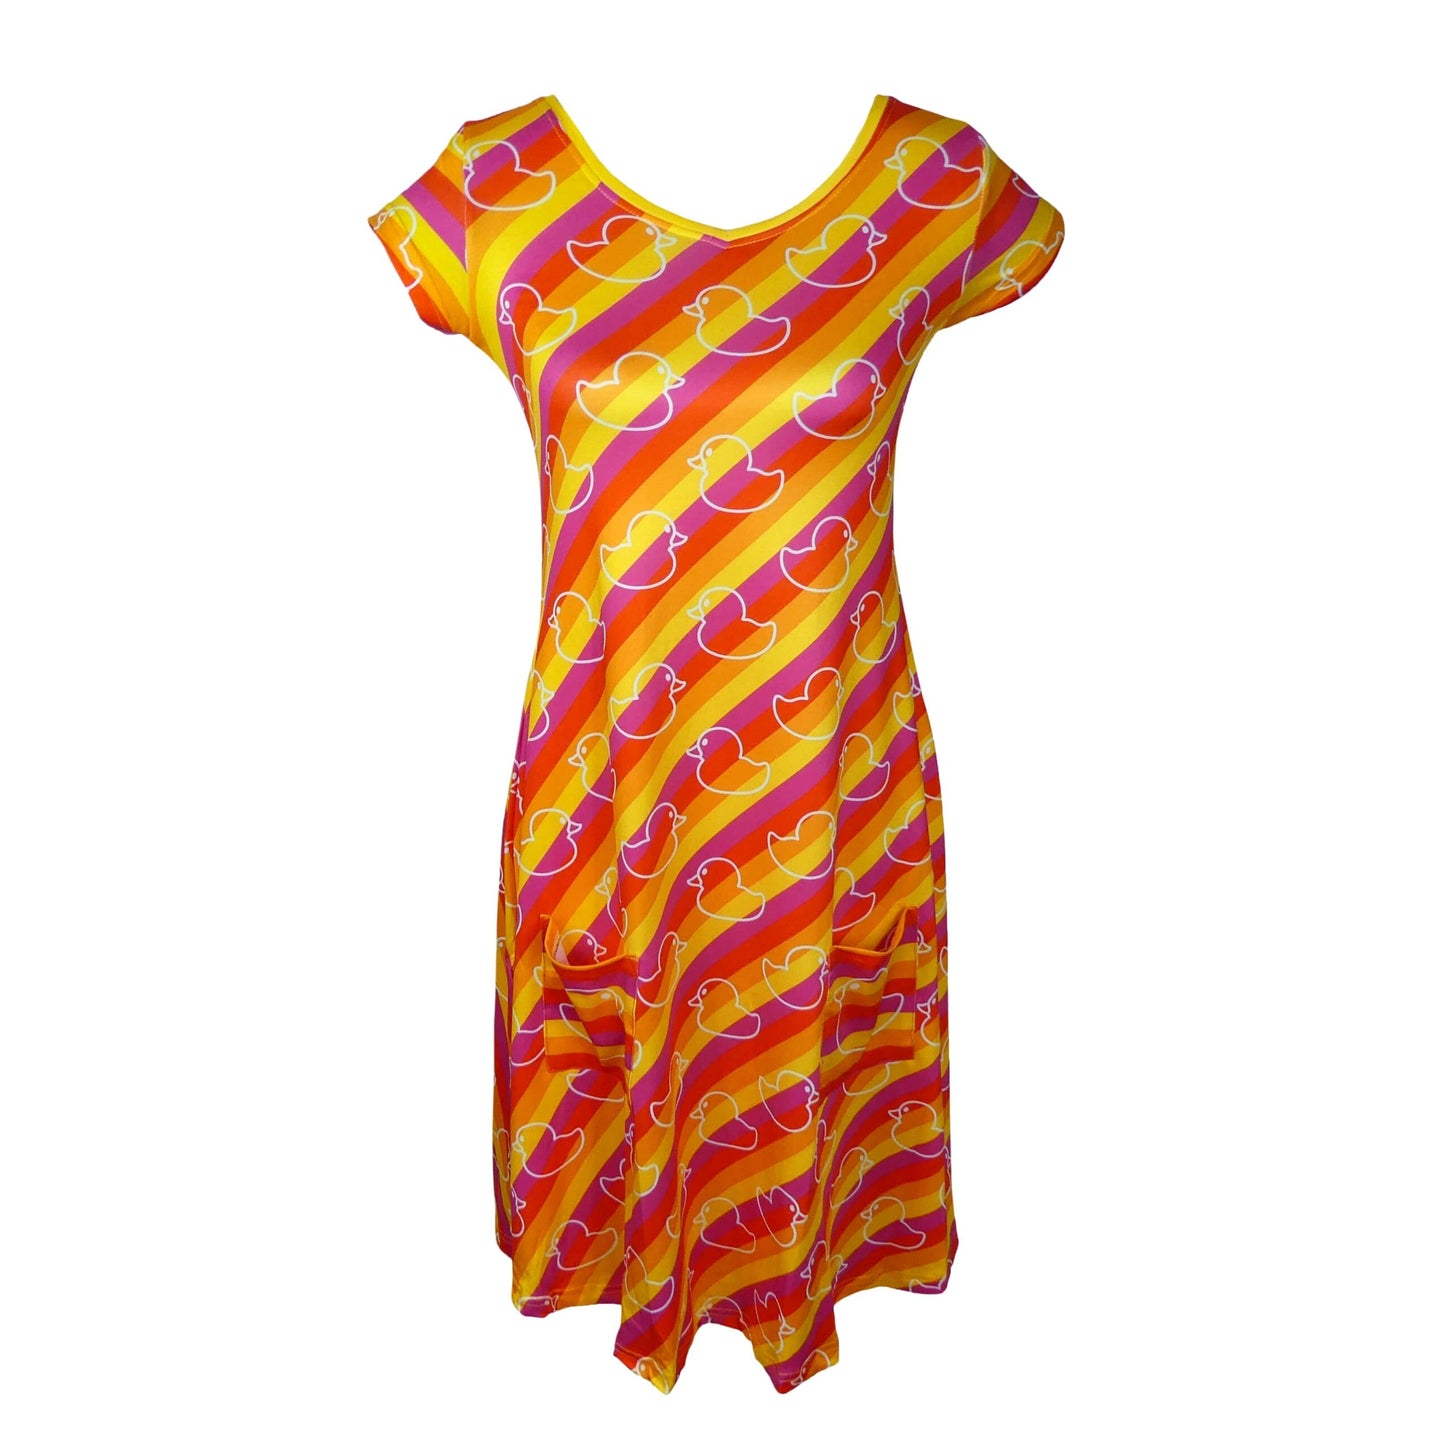 Ducky Tunic Dress by RainbowsAndFairies.com (Rubber Duck - Sesame Street - Dress With Pockets - Mod Retro - Vintage Inspired) - SKU: CL_TUNDR_DUCKY_ORG - 01